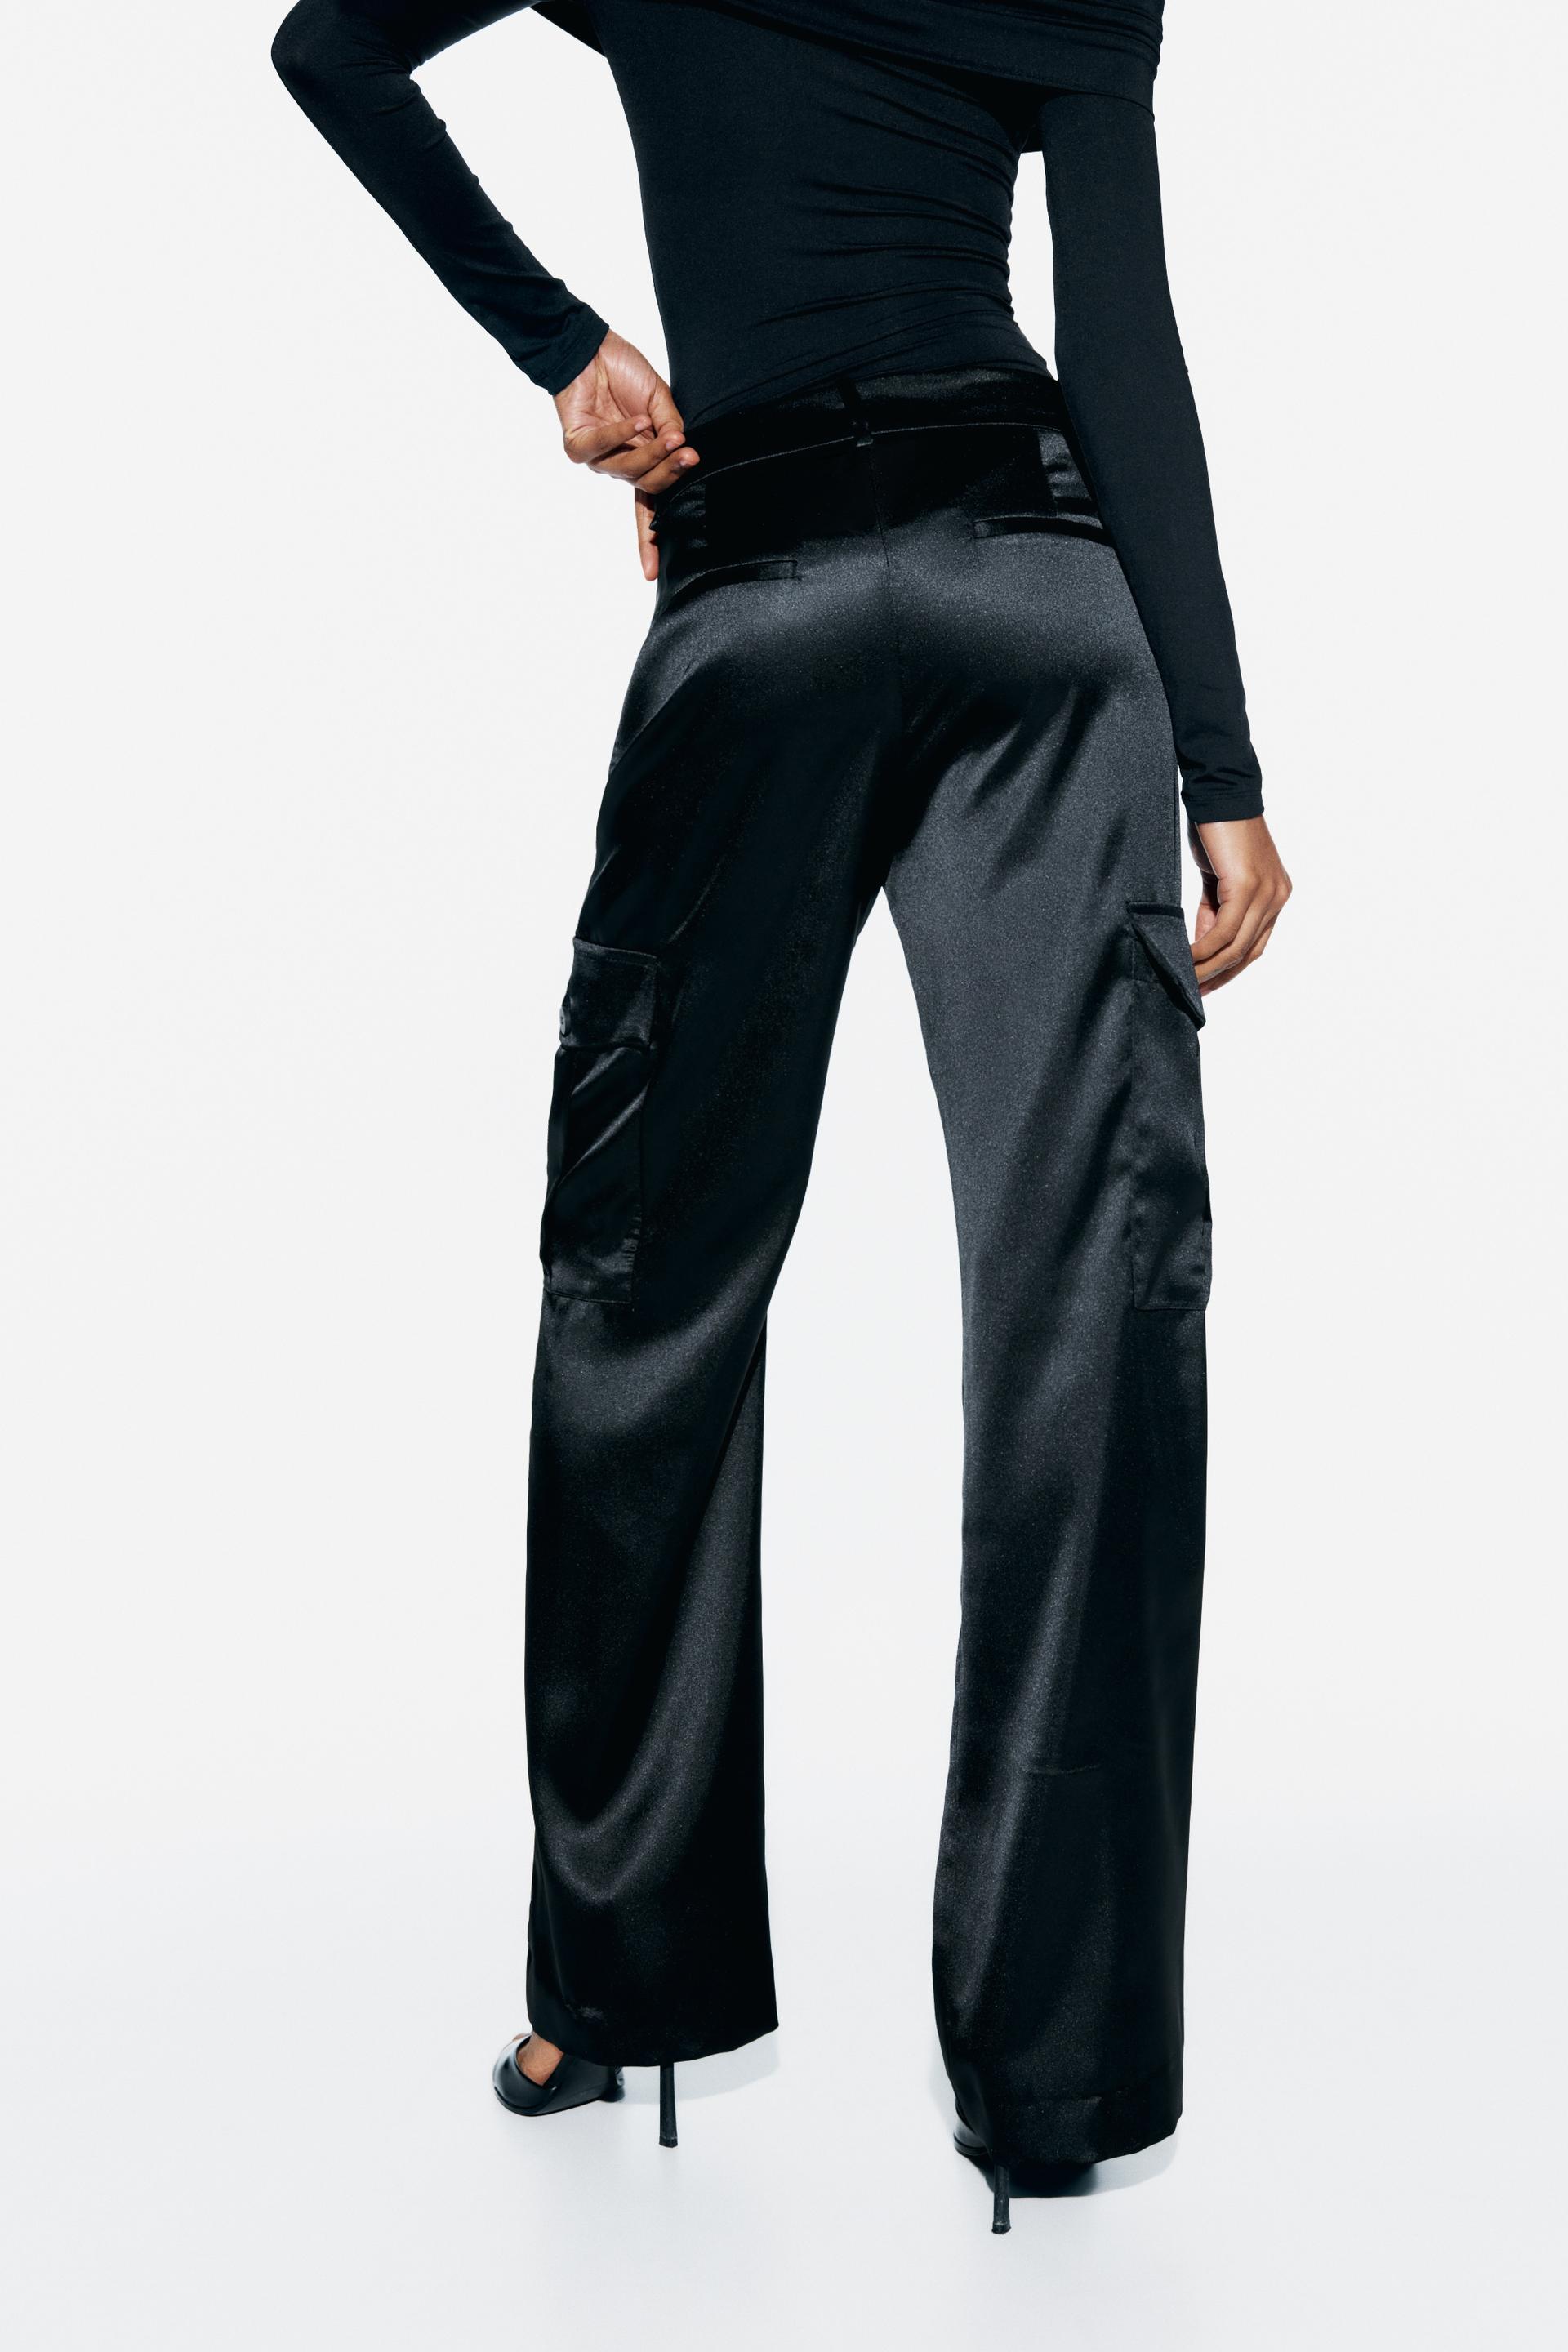 ZARA Skinny Dressy BLACK Pants Pull On Stretch Clear Crystals Size XL BNWT